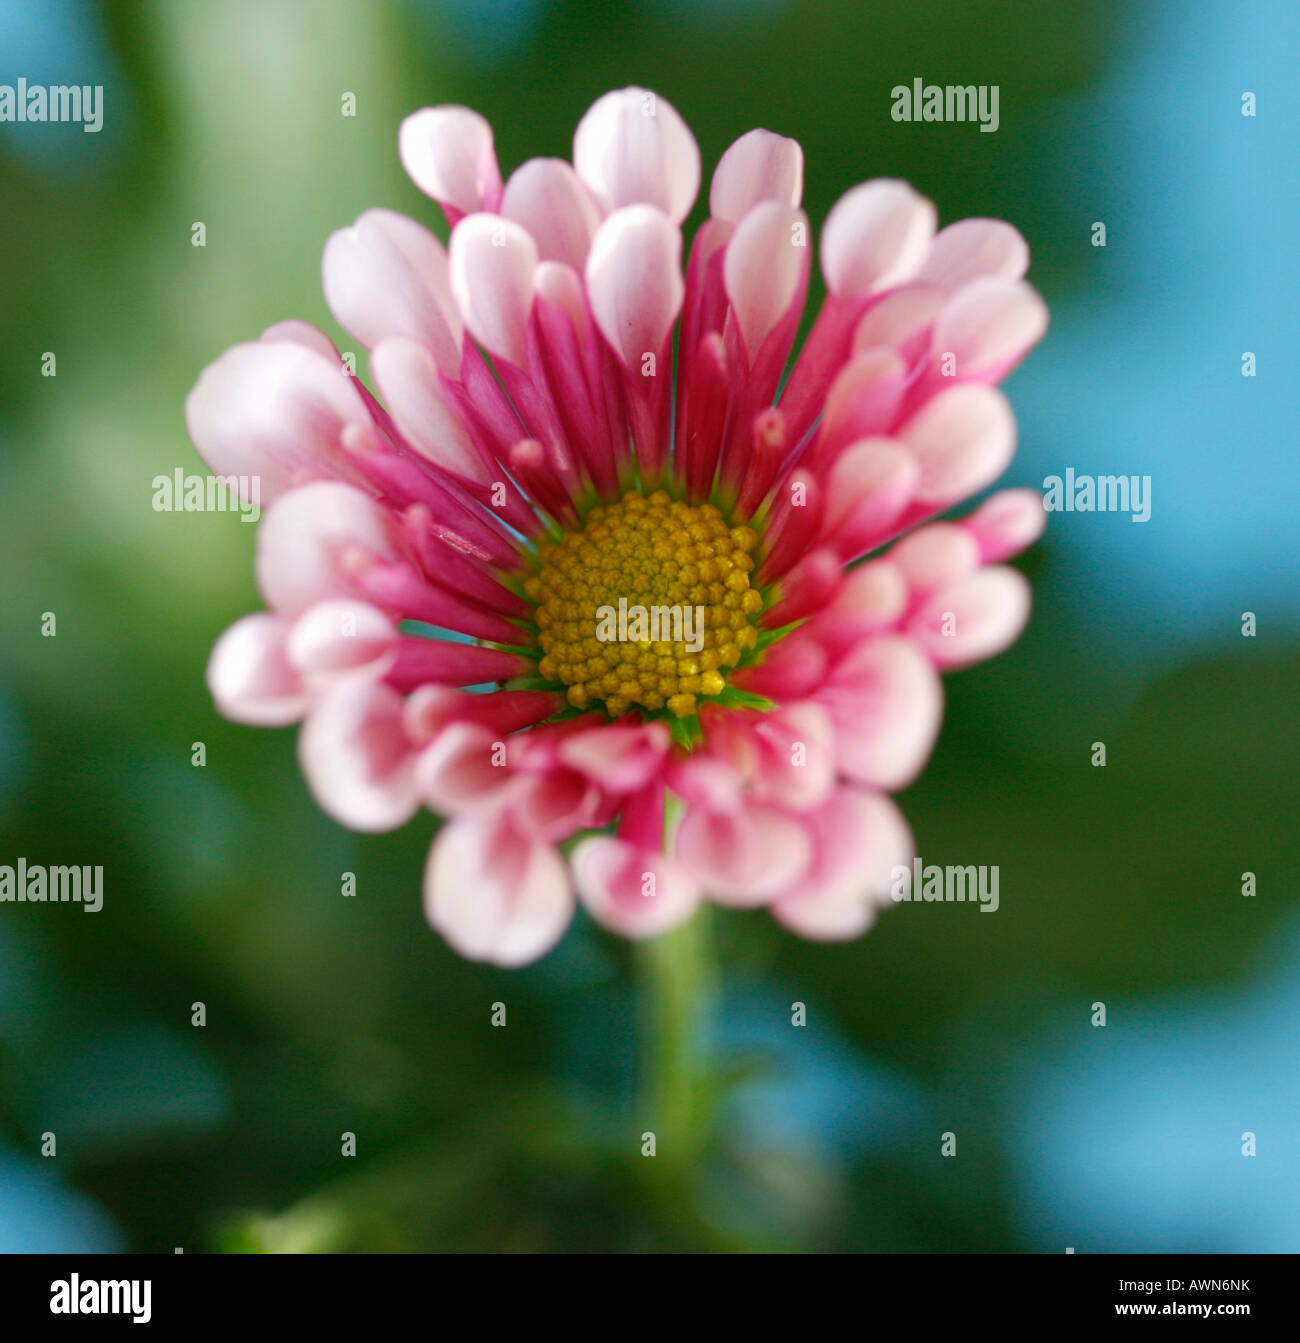 Mum or Chrysanthemum (Asteraceae) Stock Photo